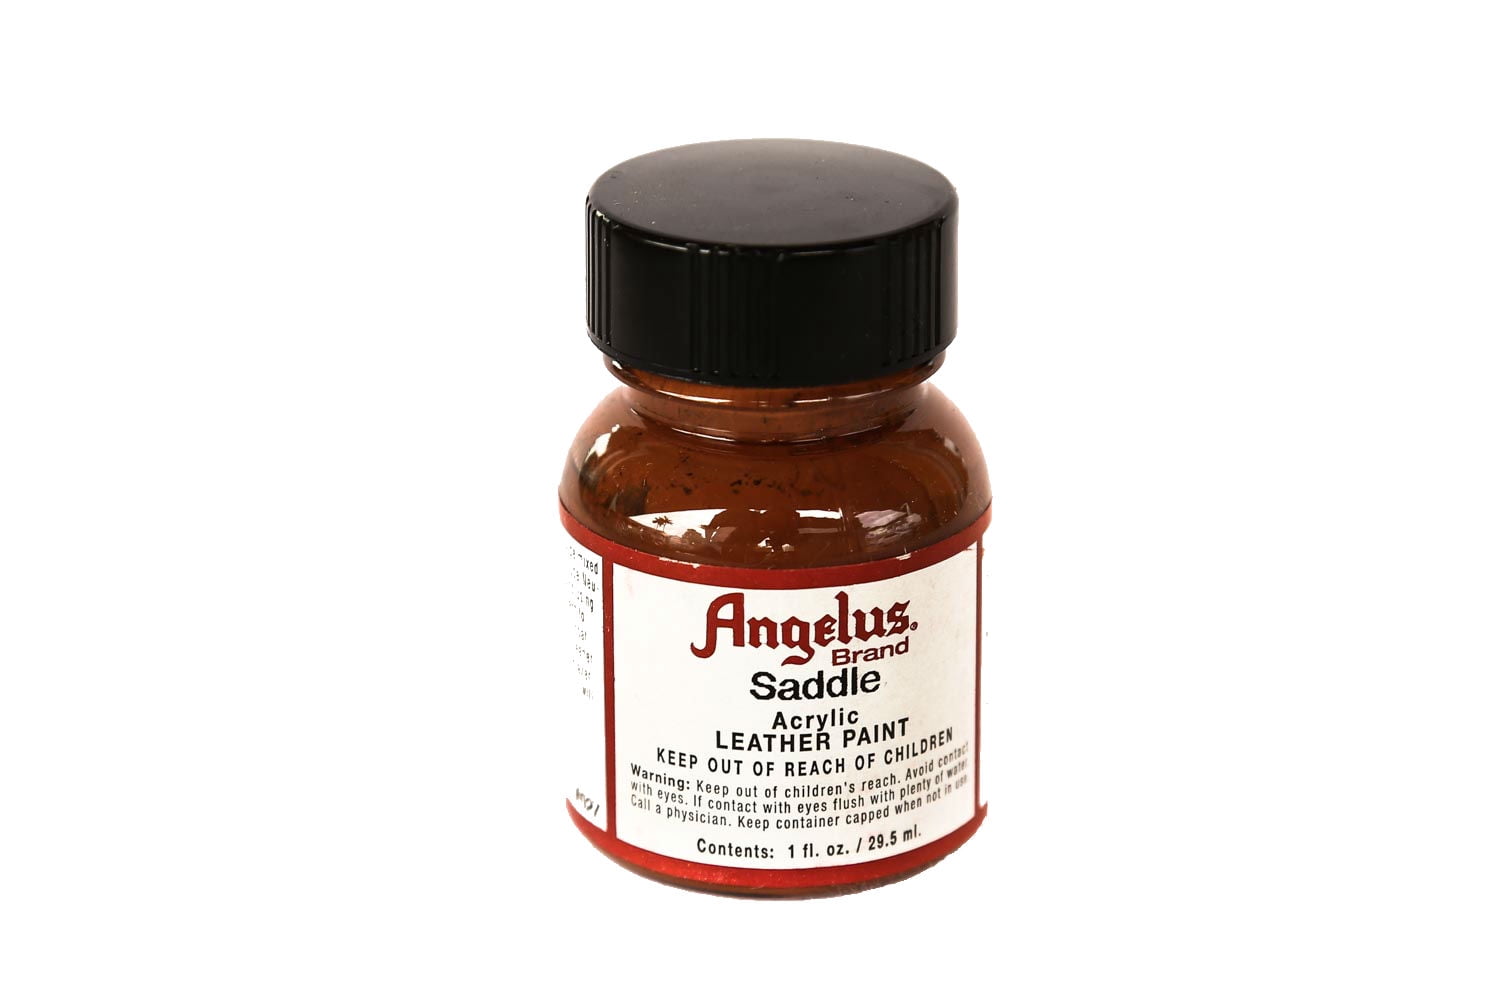 Angelus® Acrylic Leather Paint, Vachetta 1 oz.